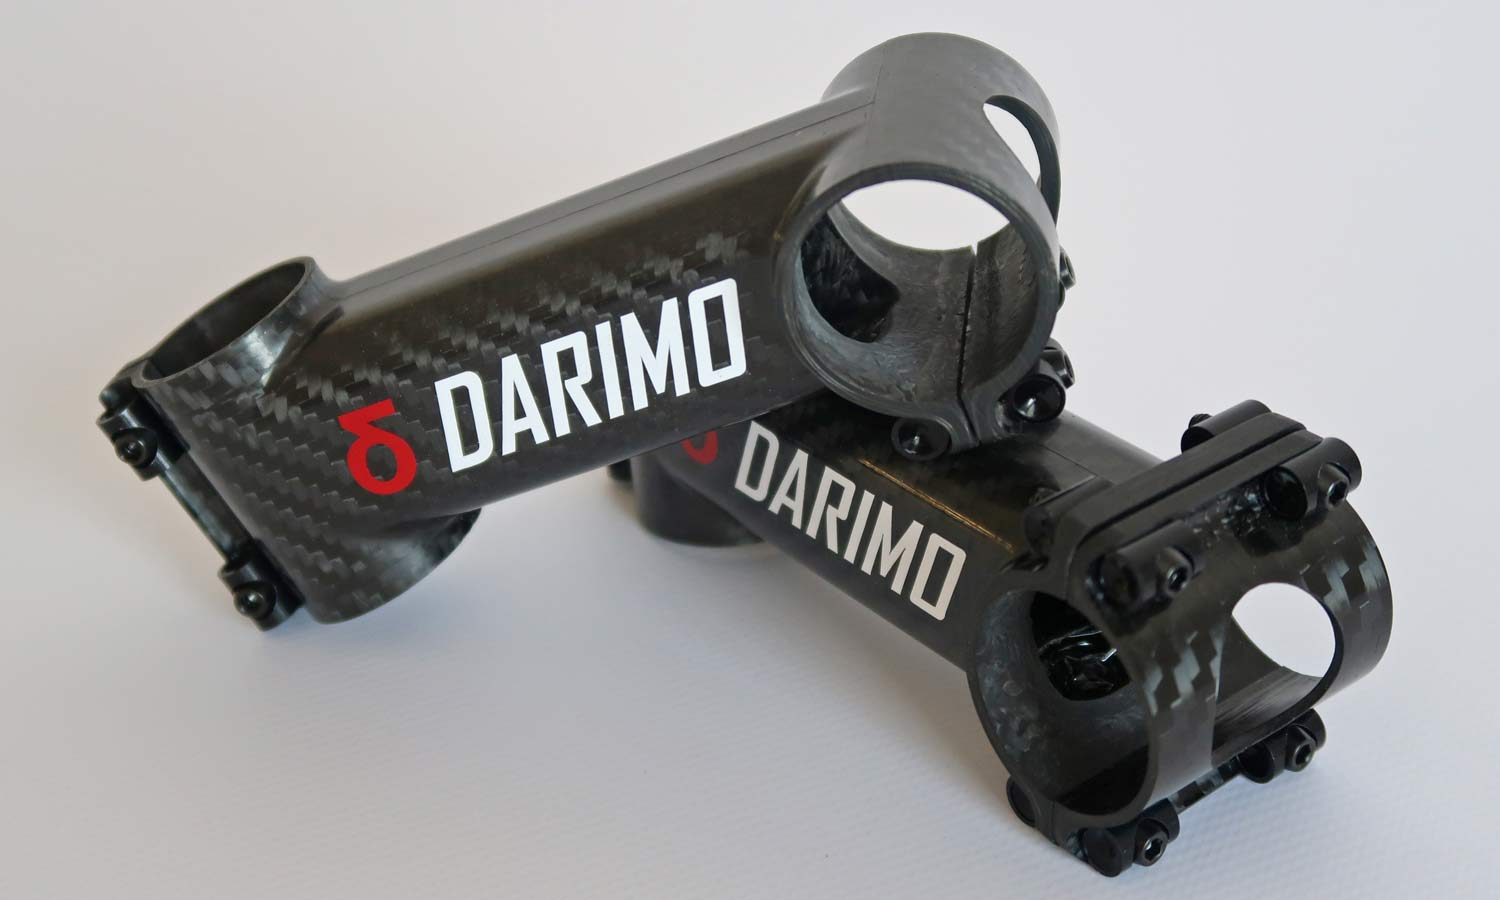 Darimo X2 stem ultralight lightweight handmade carbon mountain bike stem, made-in-Spain